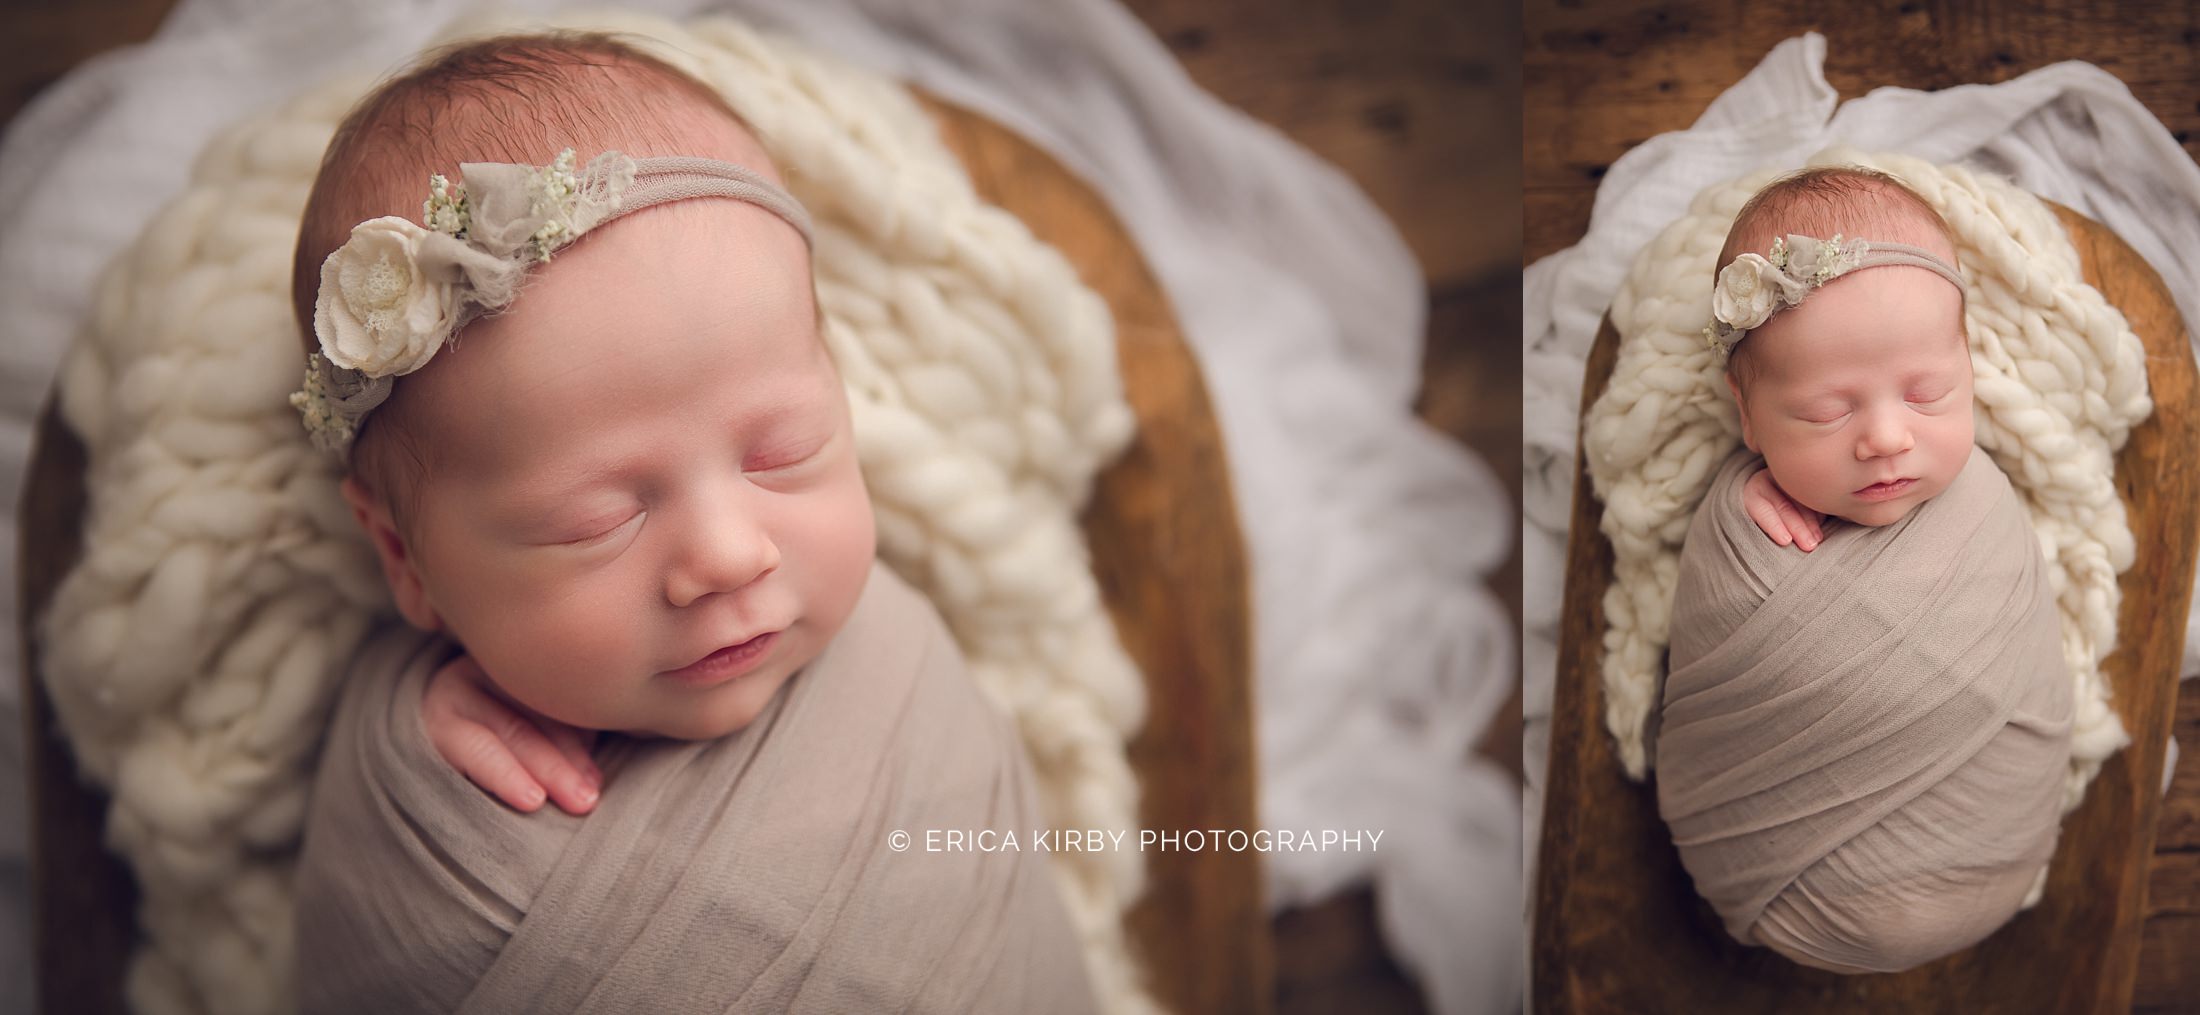 Newborn Baby Photographers NWA - baby girl swaddled newborn photo session soft natural styled studio session - erica kirby photography